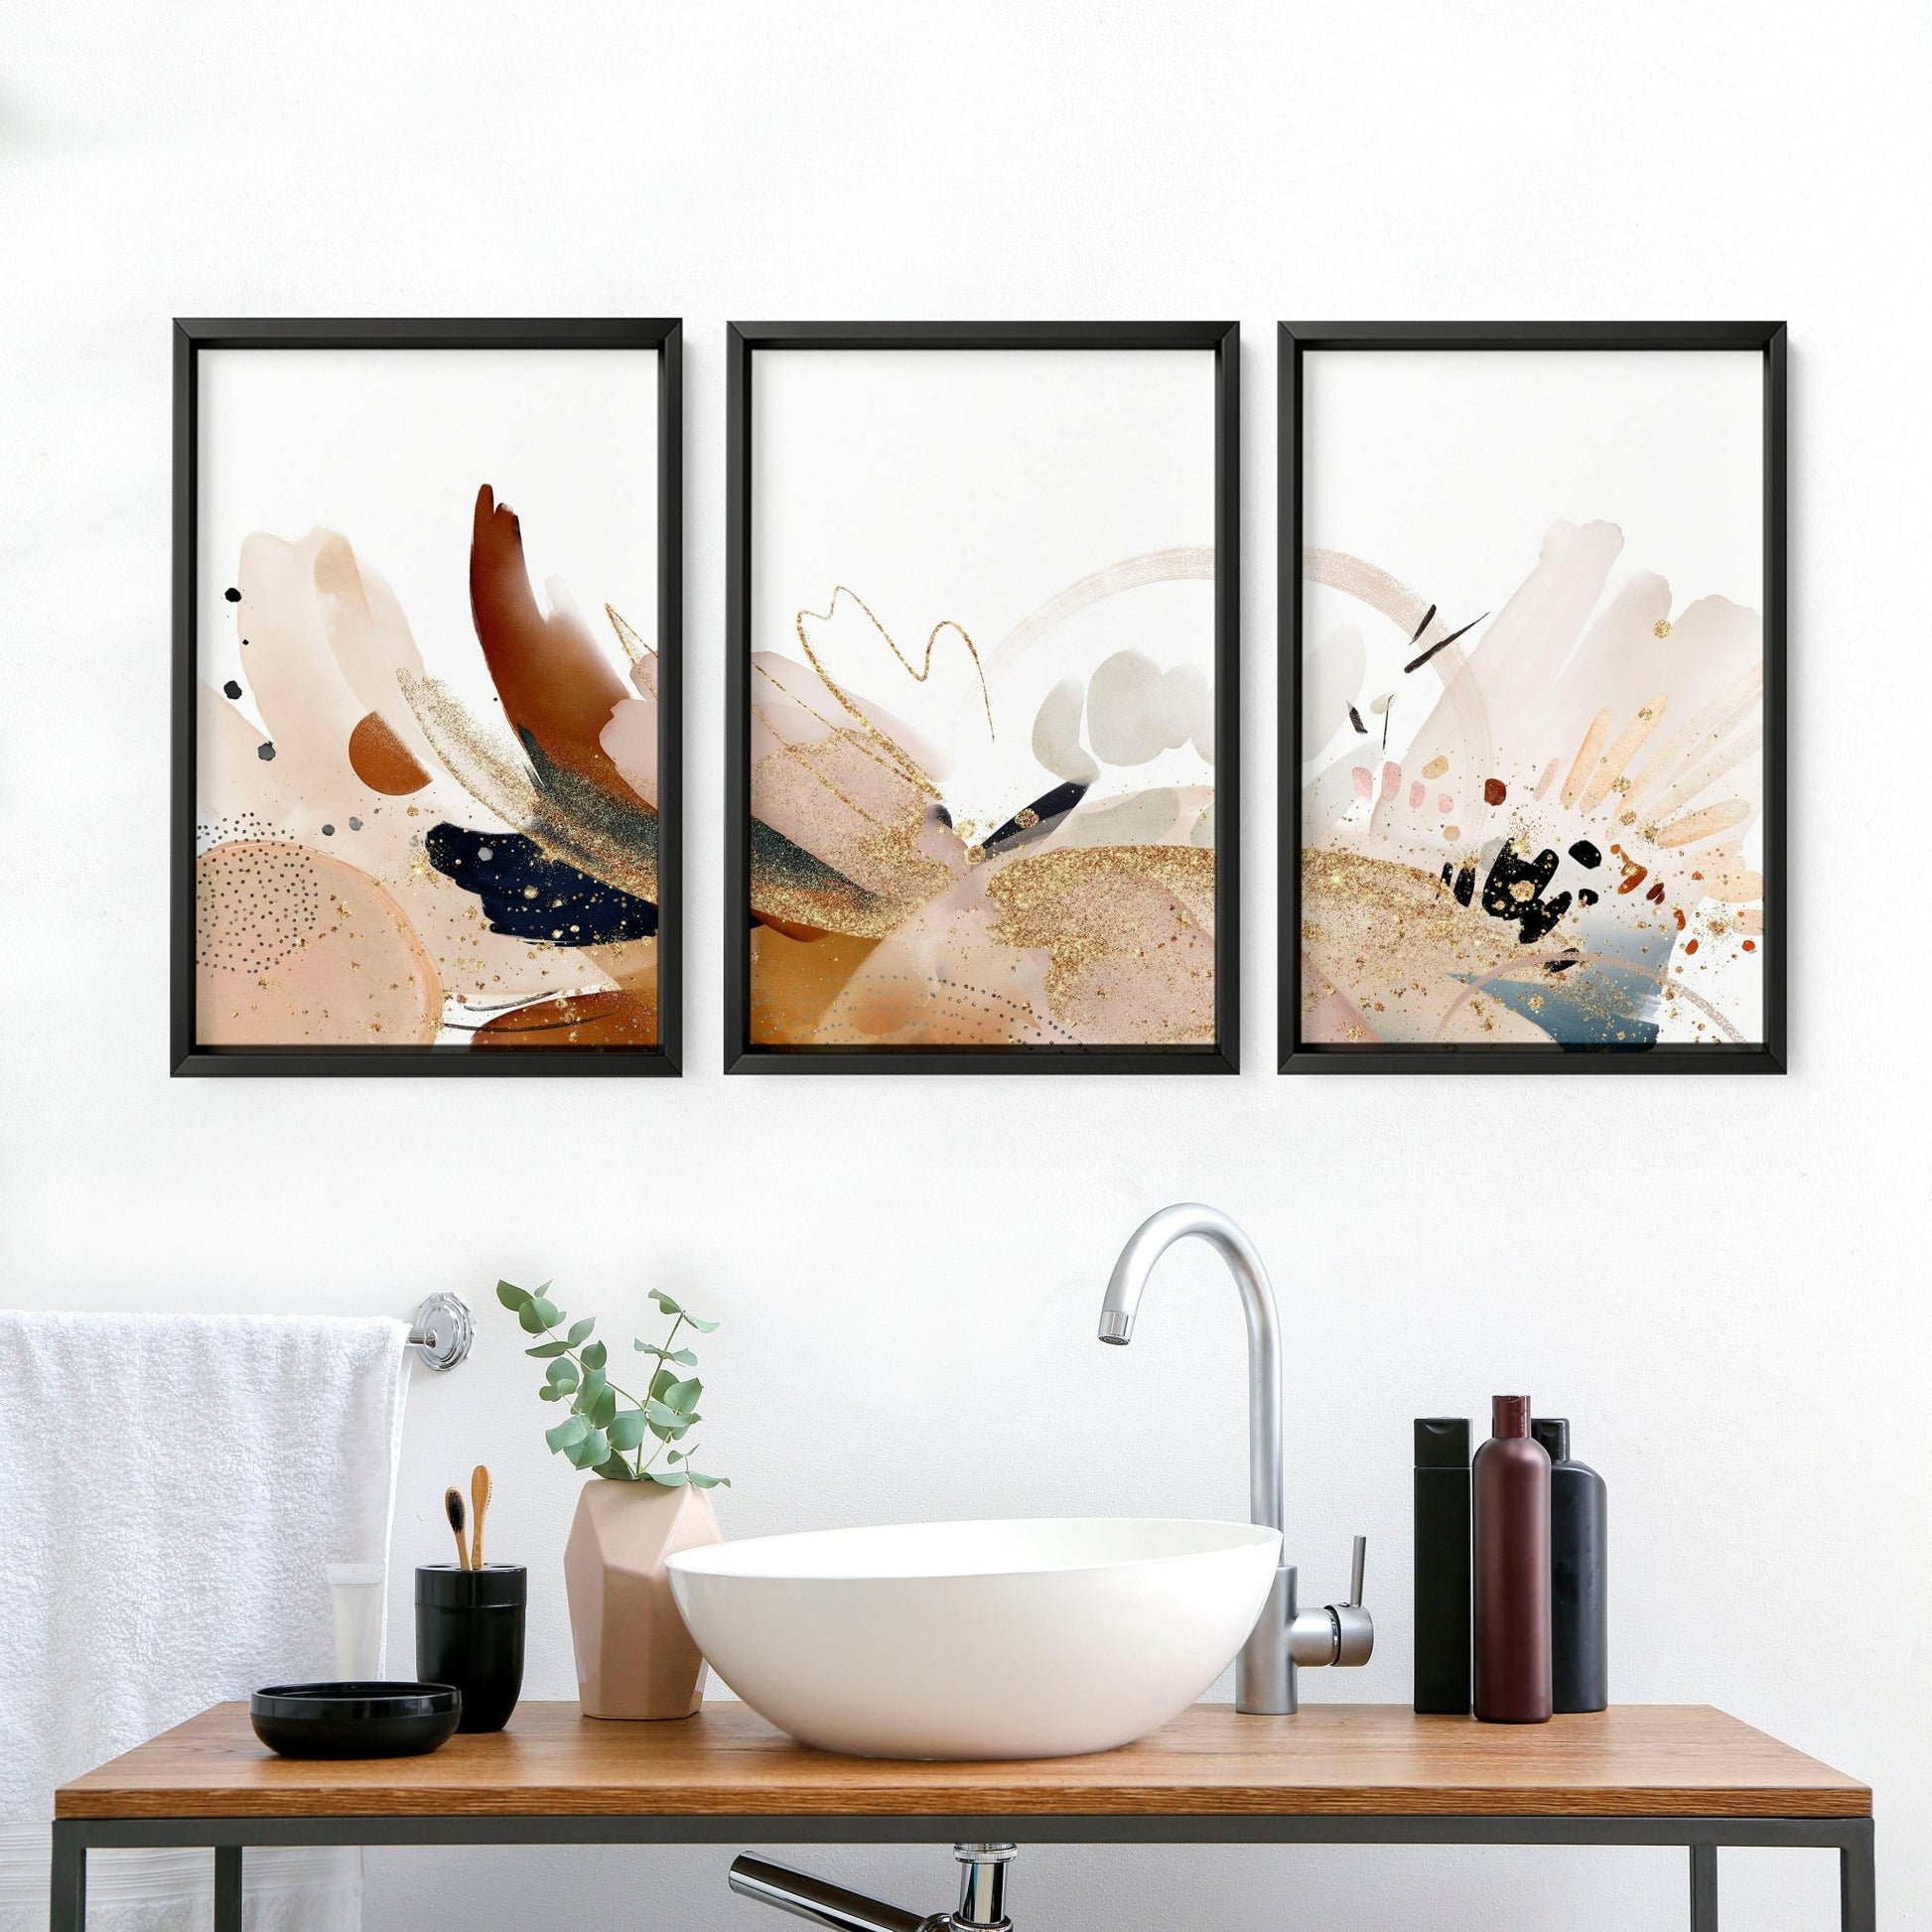 Abstract bathroom wall art | set of 3 wall prints